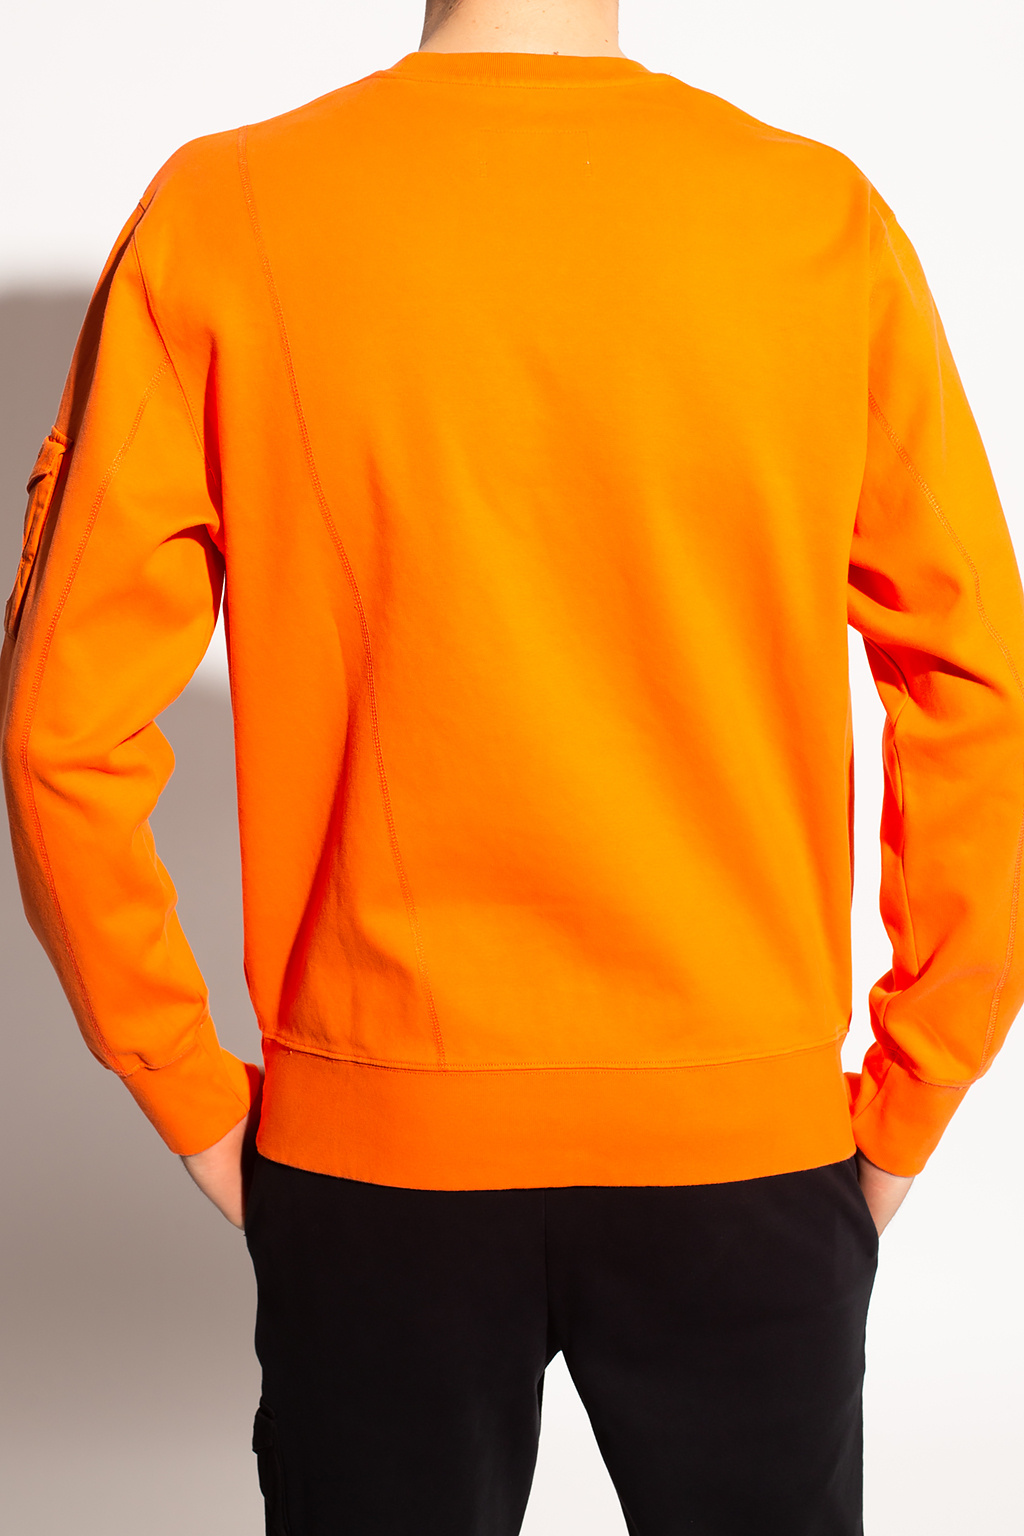 A-COLD-WALL* Sweatshirt with logo | Men's Clothing | Vitkac